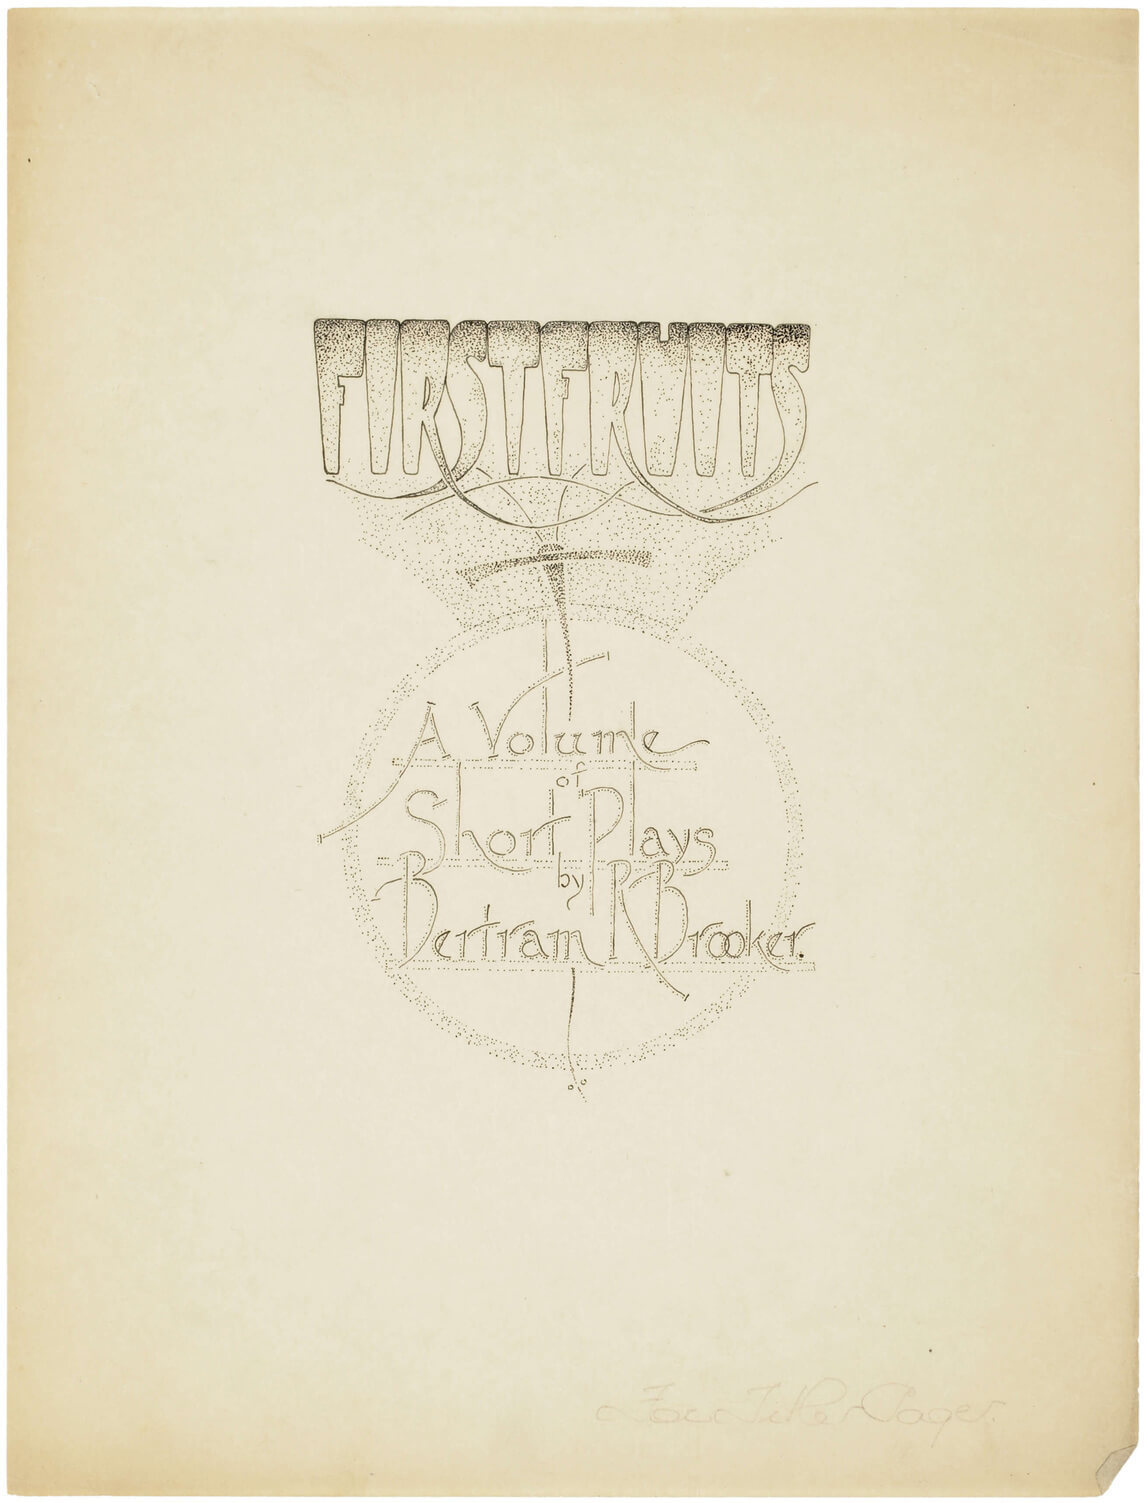 Art Canada Institute, Bertram Brooker,over illustration for “First Fruits: A Volume of Short Plays by Bertram R. Brooker, c. 1913-15